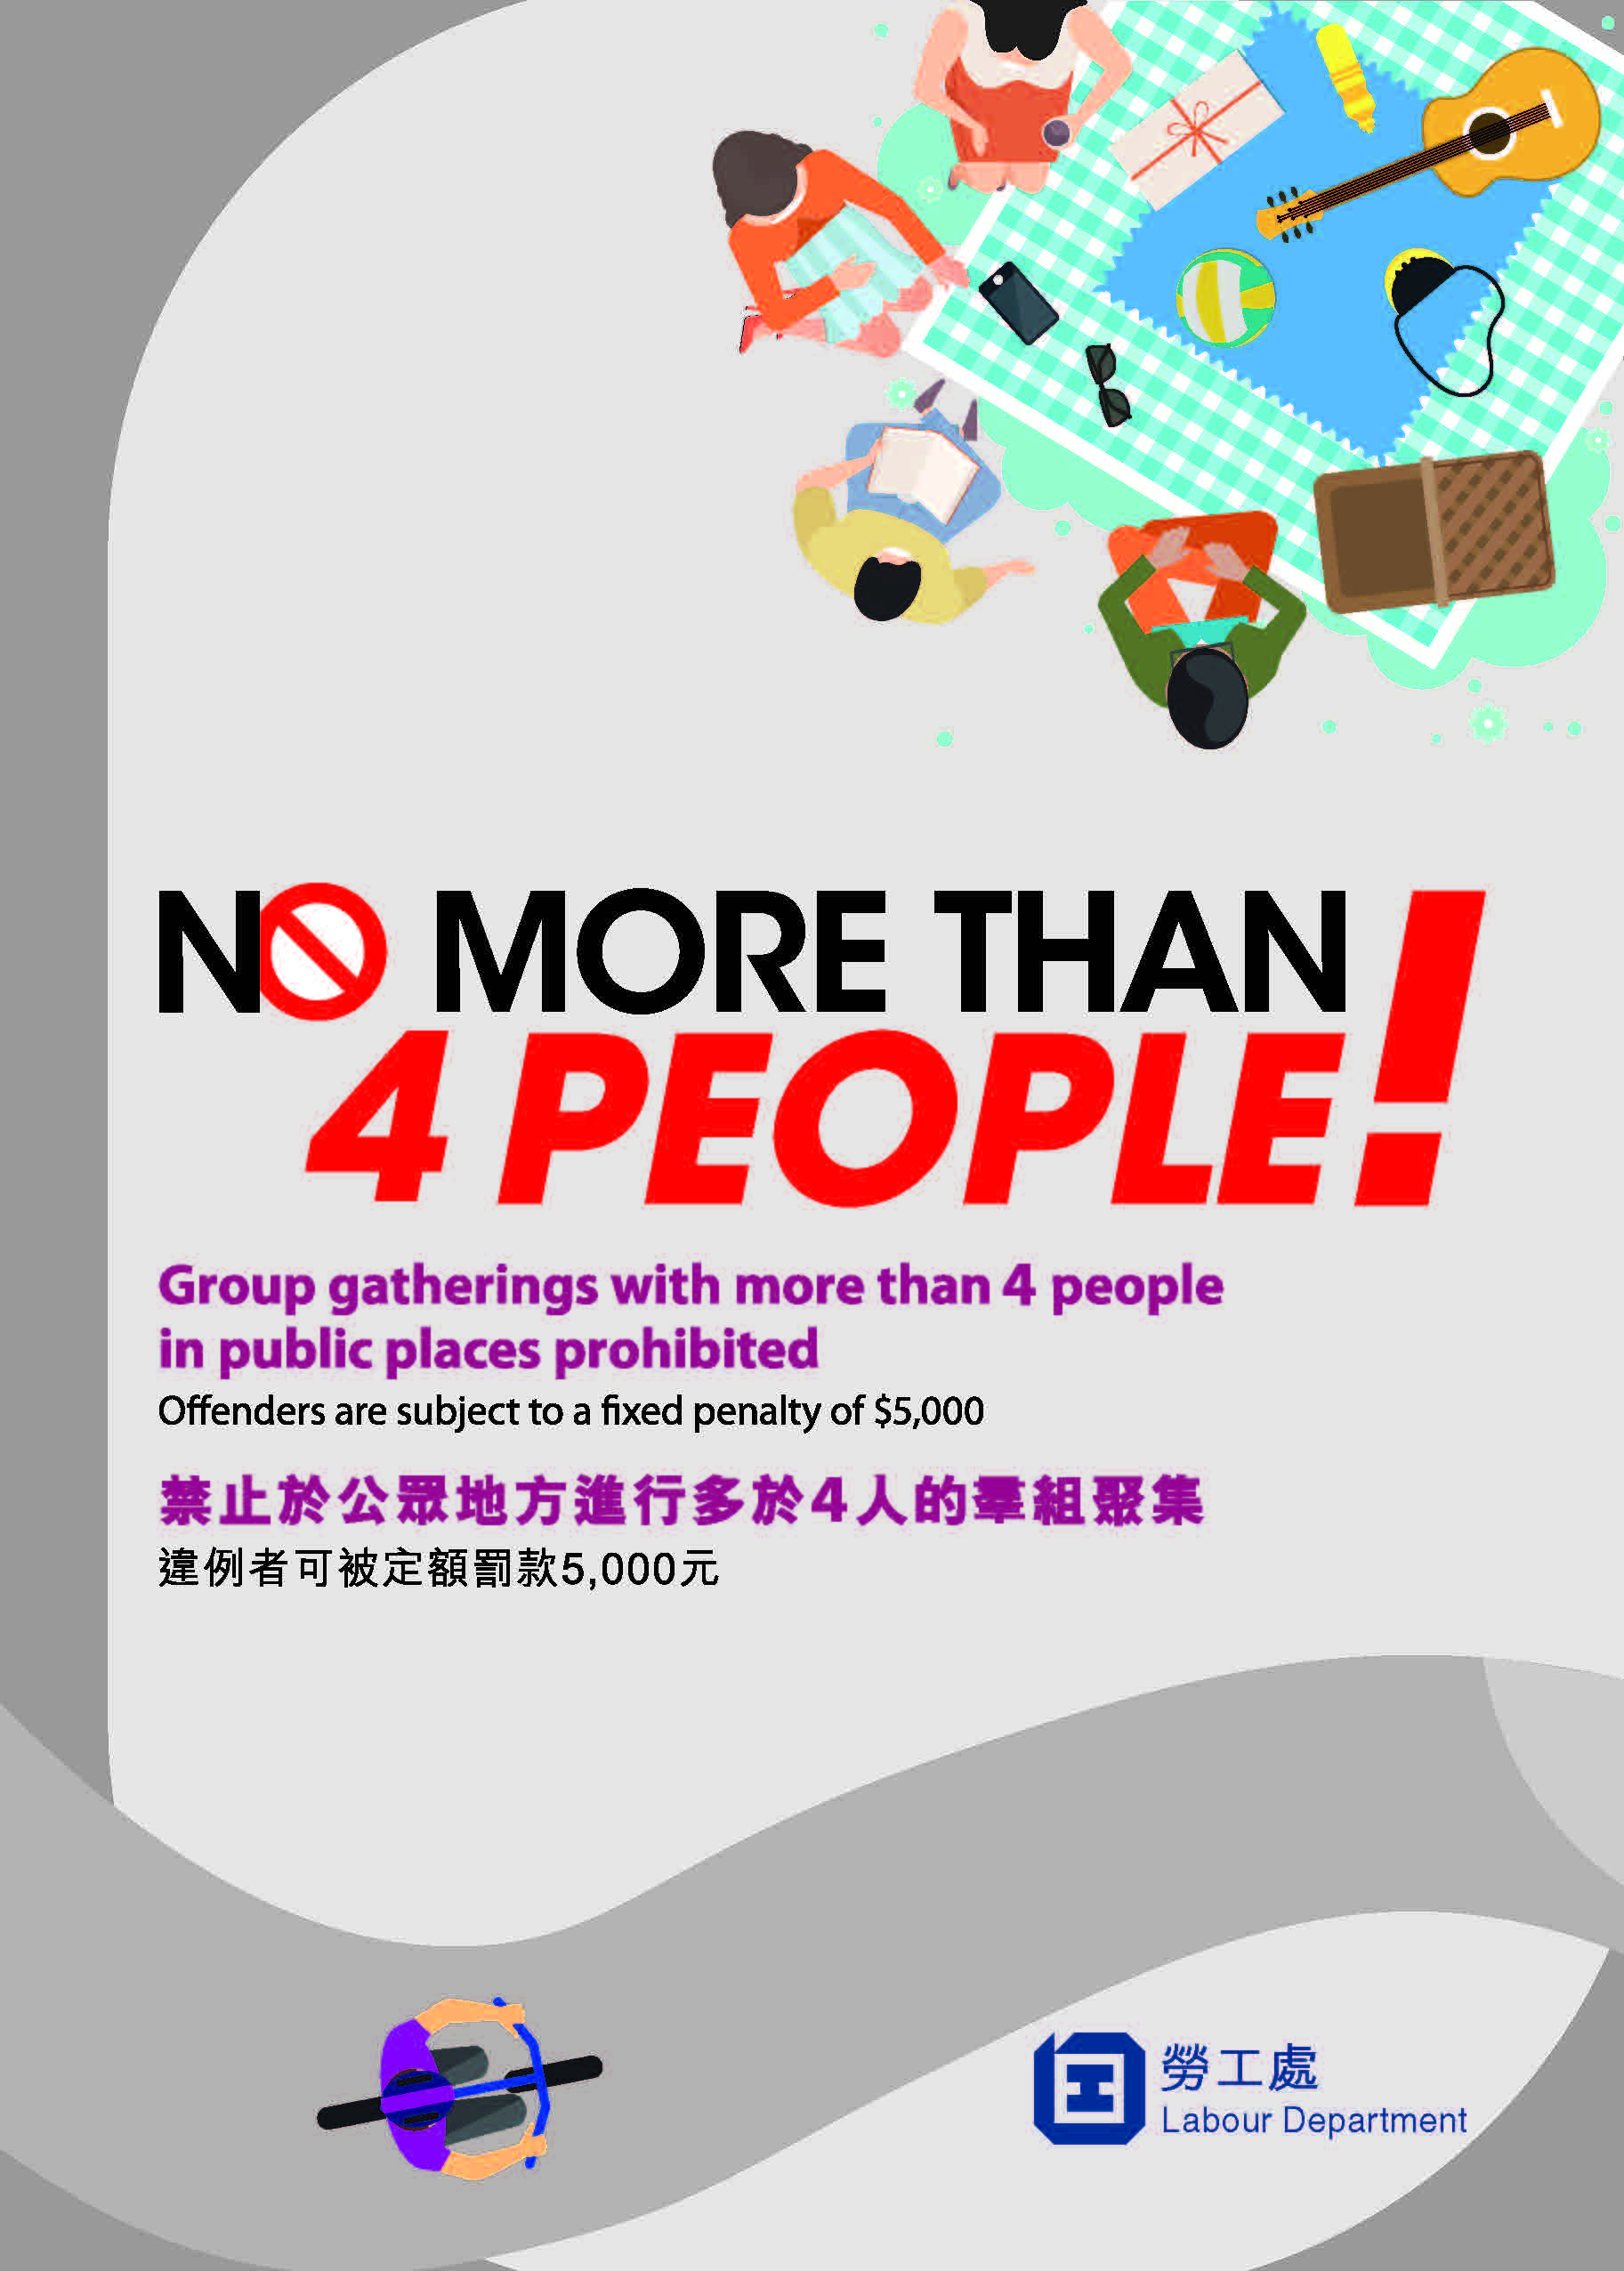 Selebaran dan Poster mengenai “Perkumpulan berkelompok yang terdiri atas lebih dari 4 orang di tempat umum dilarang”